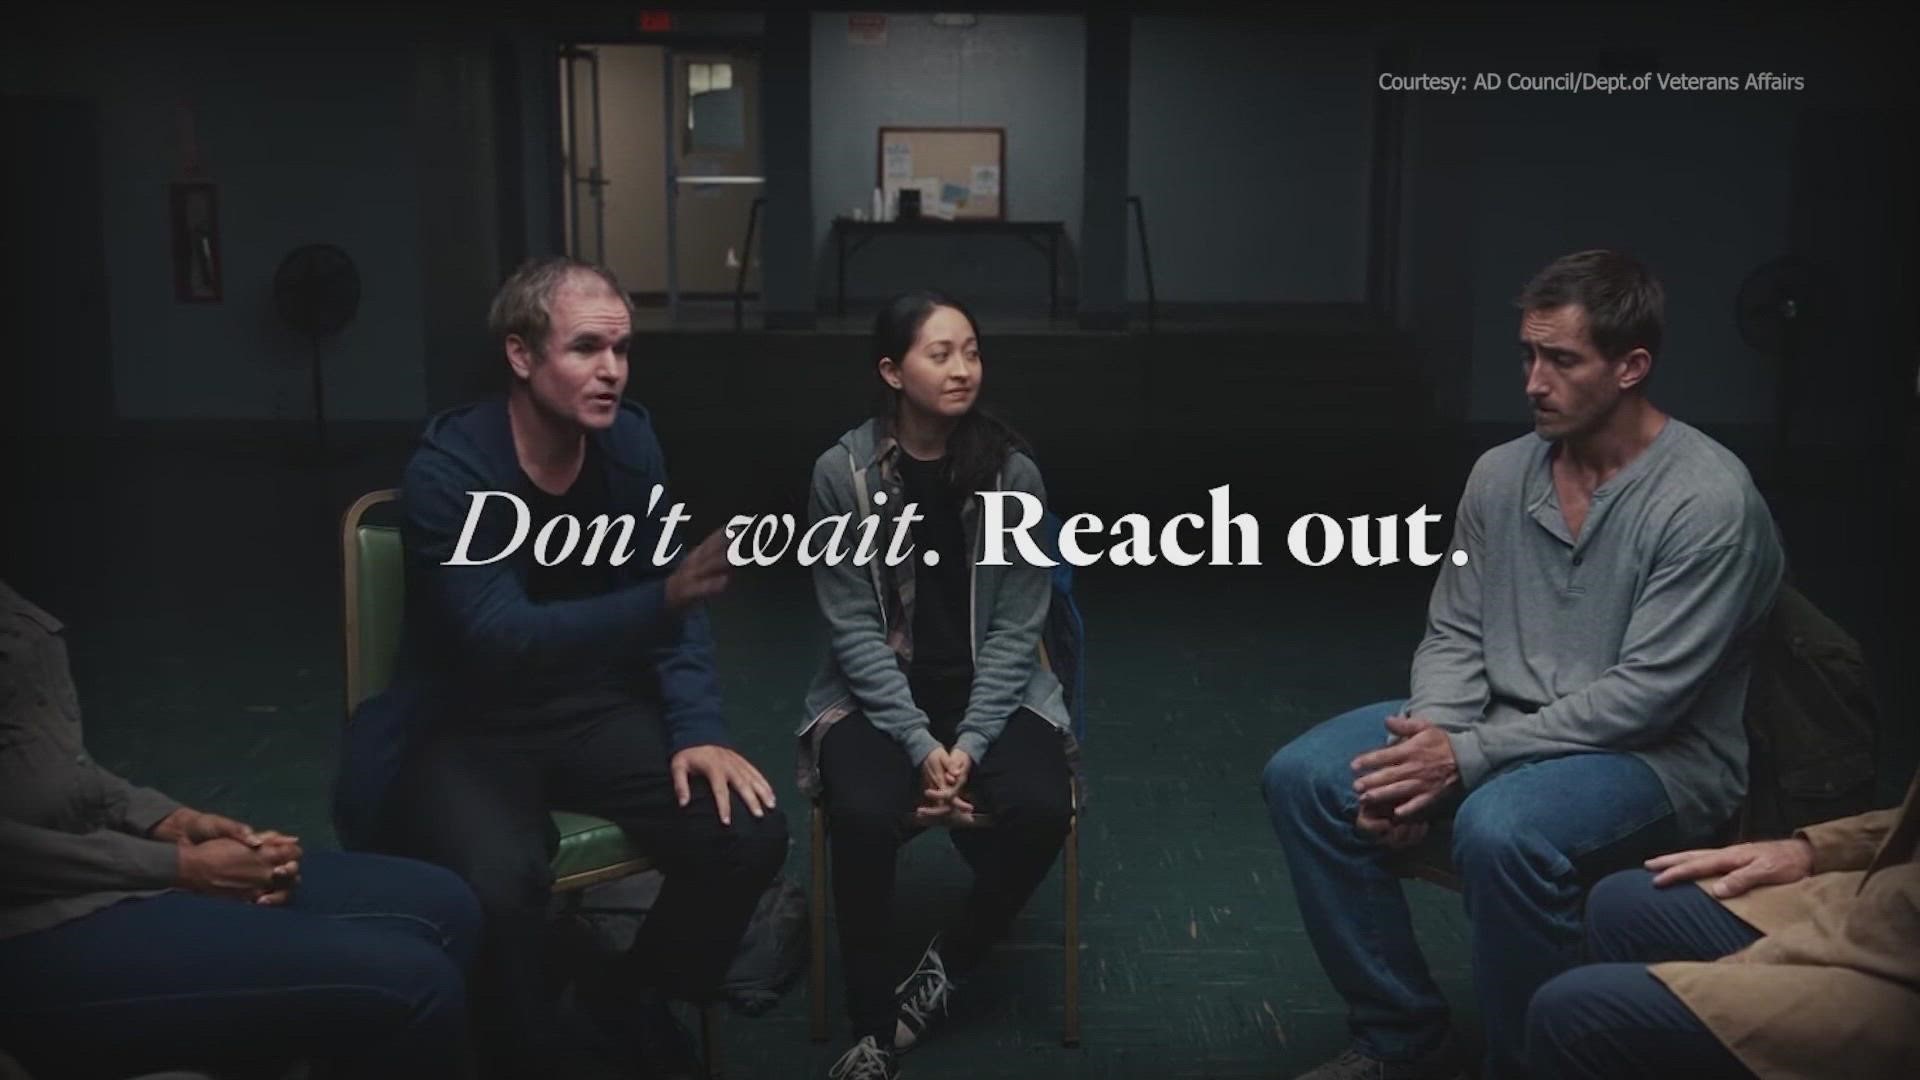 Our Marvin Hurst explains the campaign, "Don't wait, reach out."